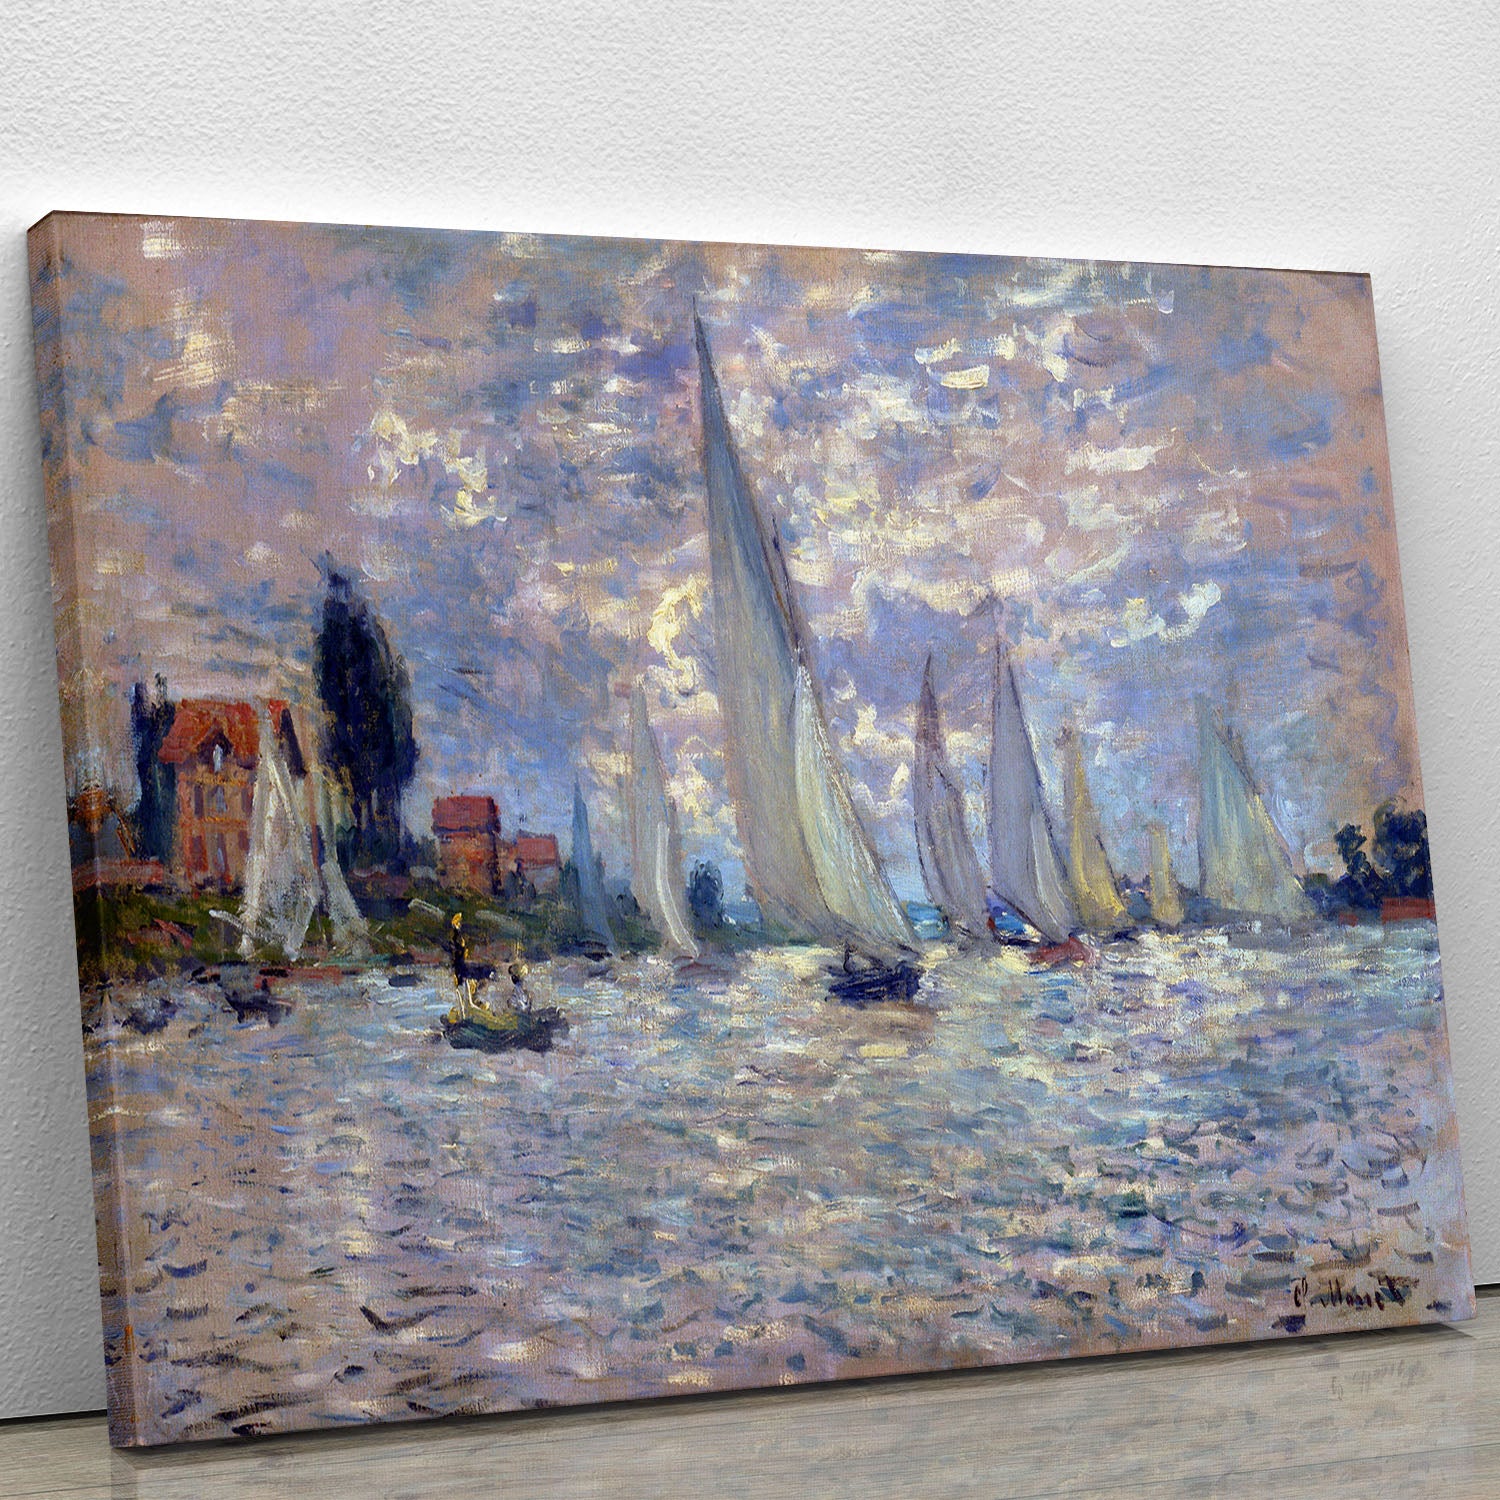 Les Barques by Monet Canvas Print or Poster - Canvas Art Rocks - 1